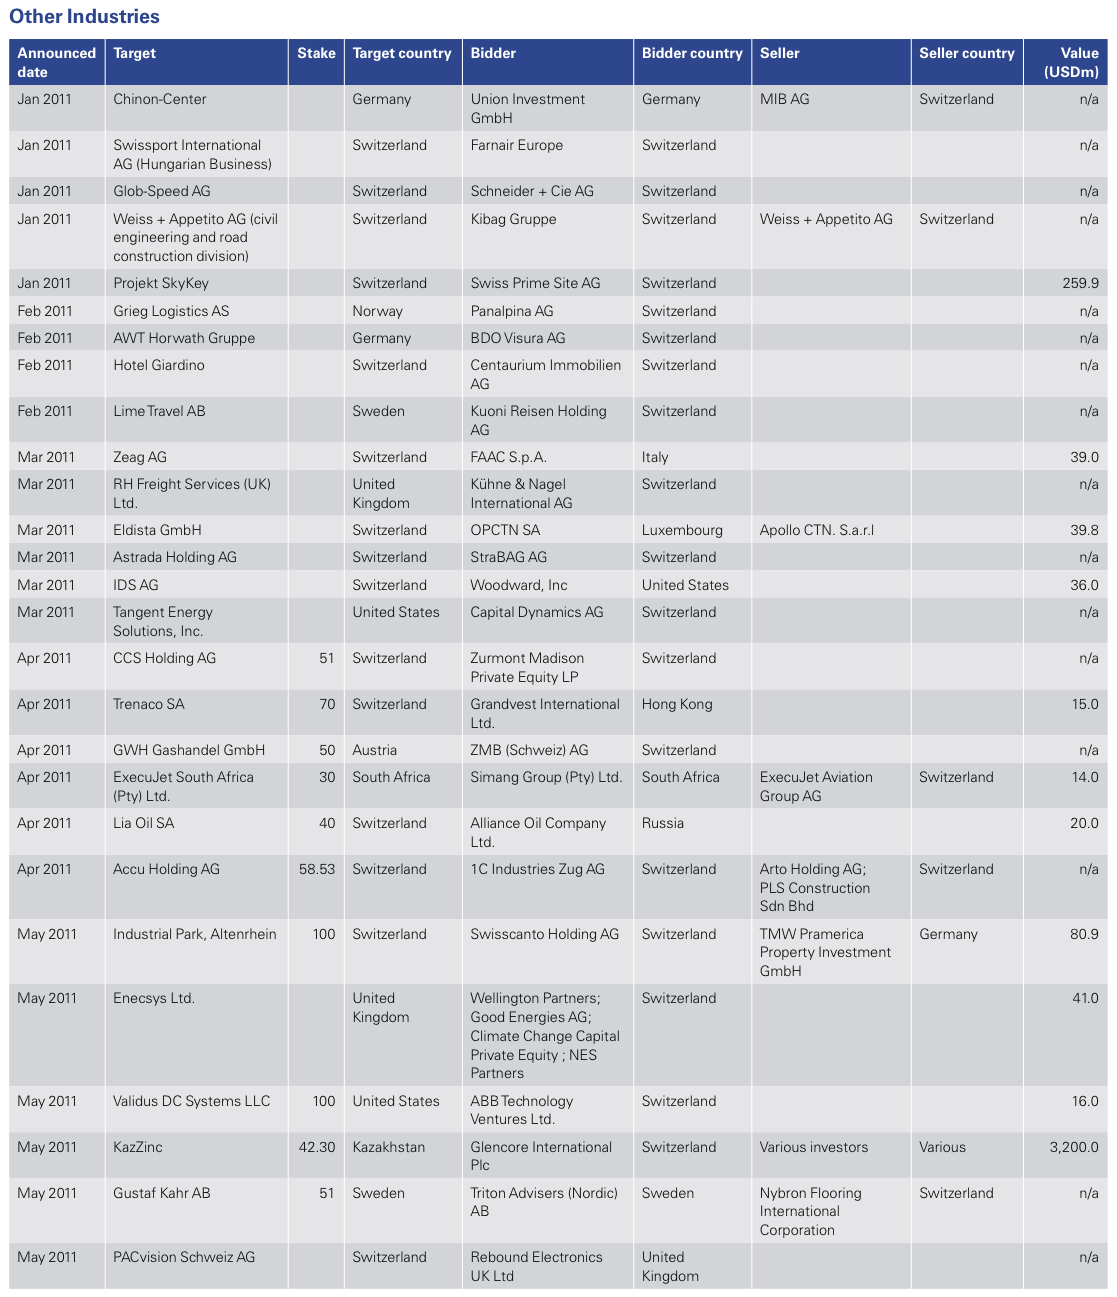 Figure 22: List of 2011 Swiss M&A Transactions